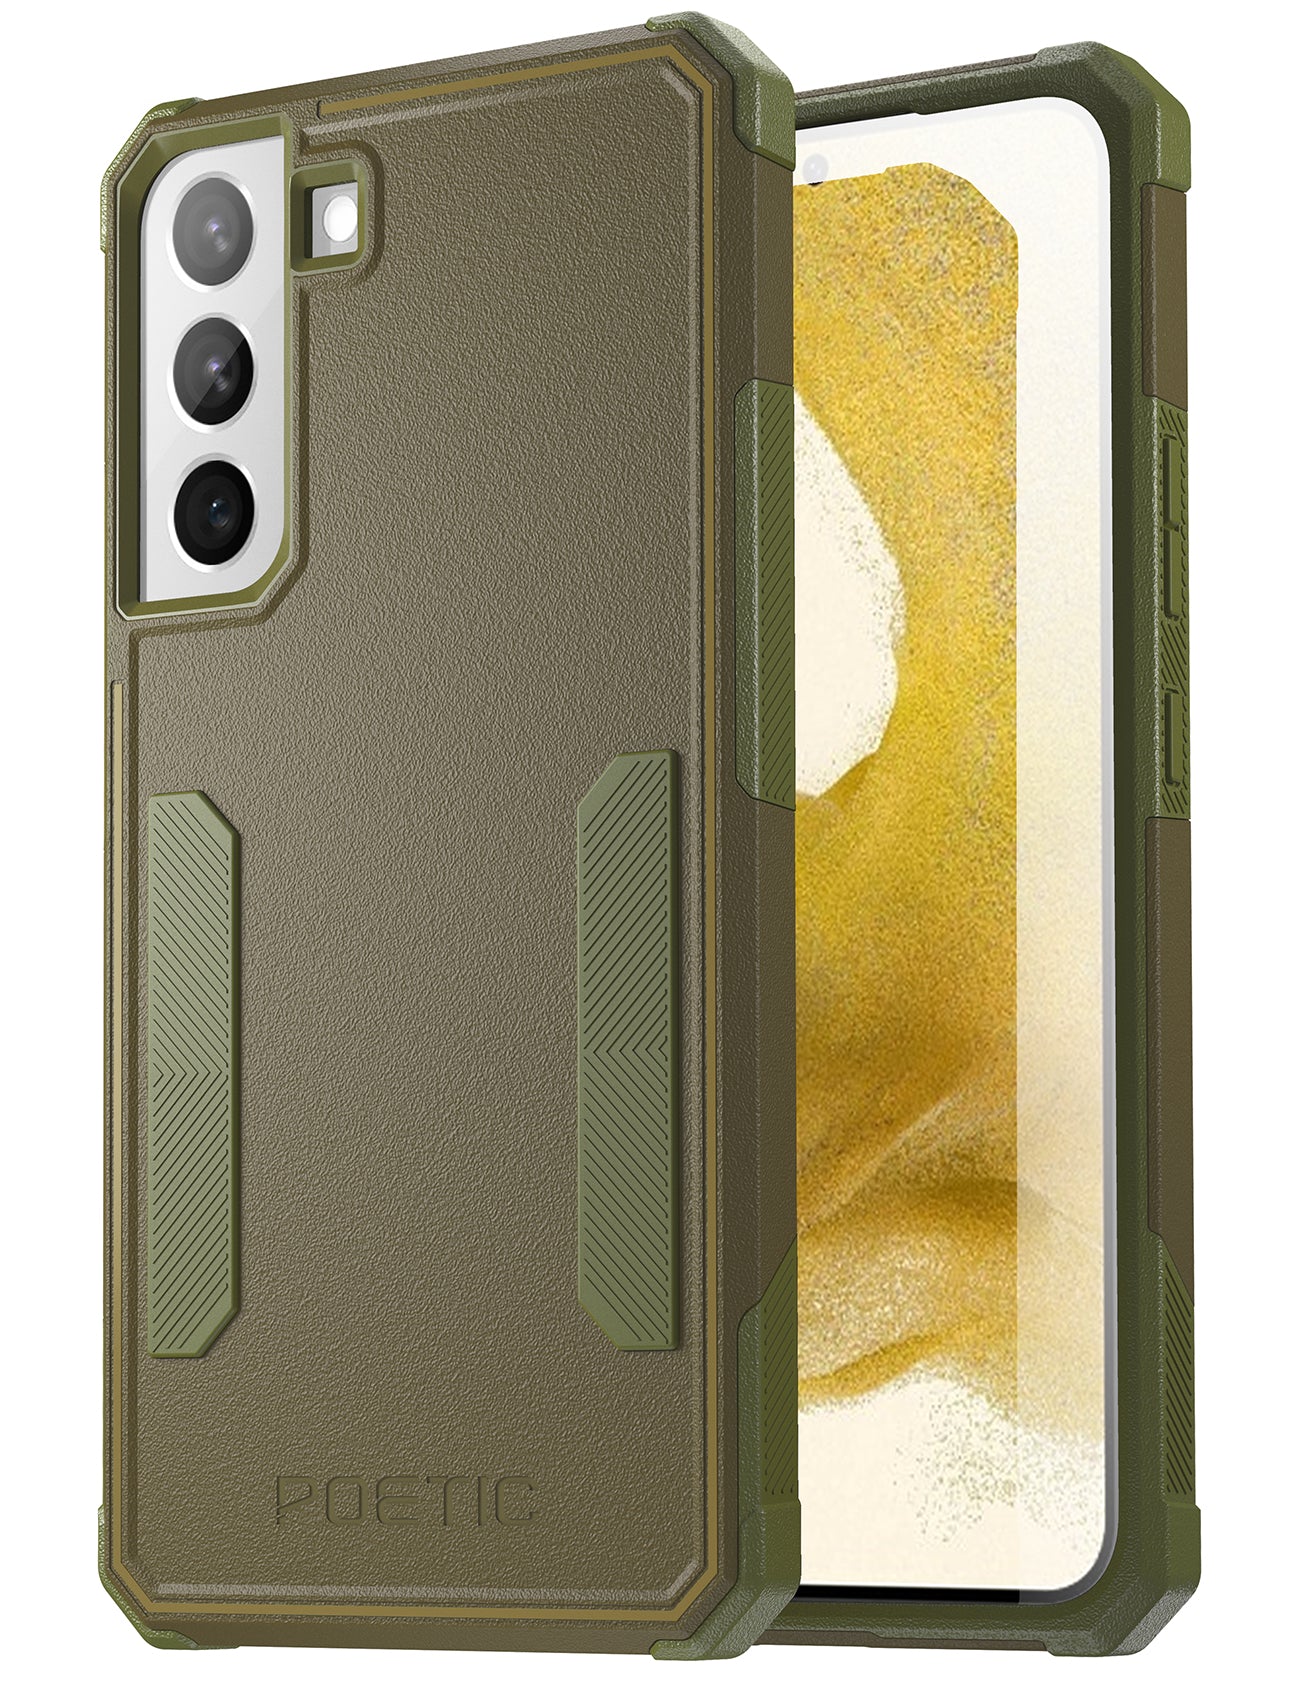 LOUIS VUITTON LOGO GREEN ICON PATTERN Samsung Galaxy S22 Plus Case Cover